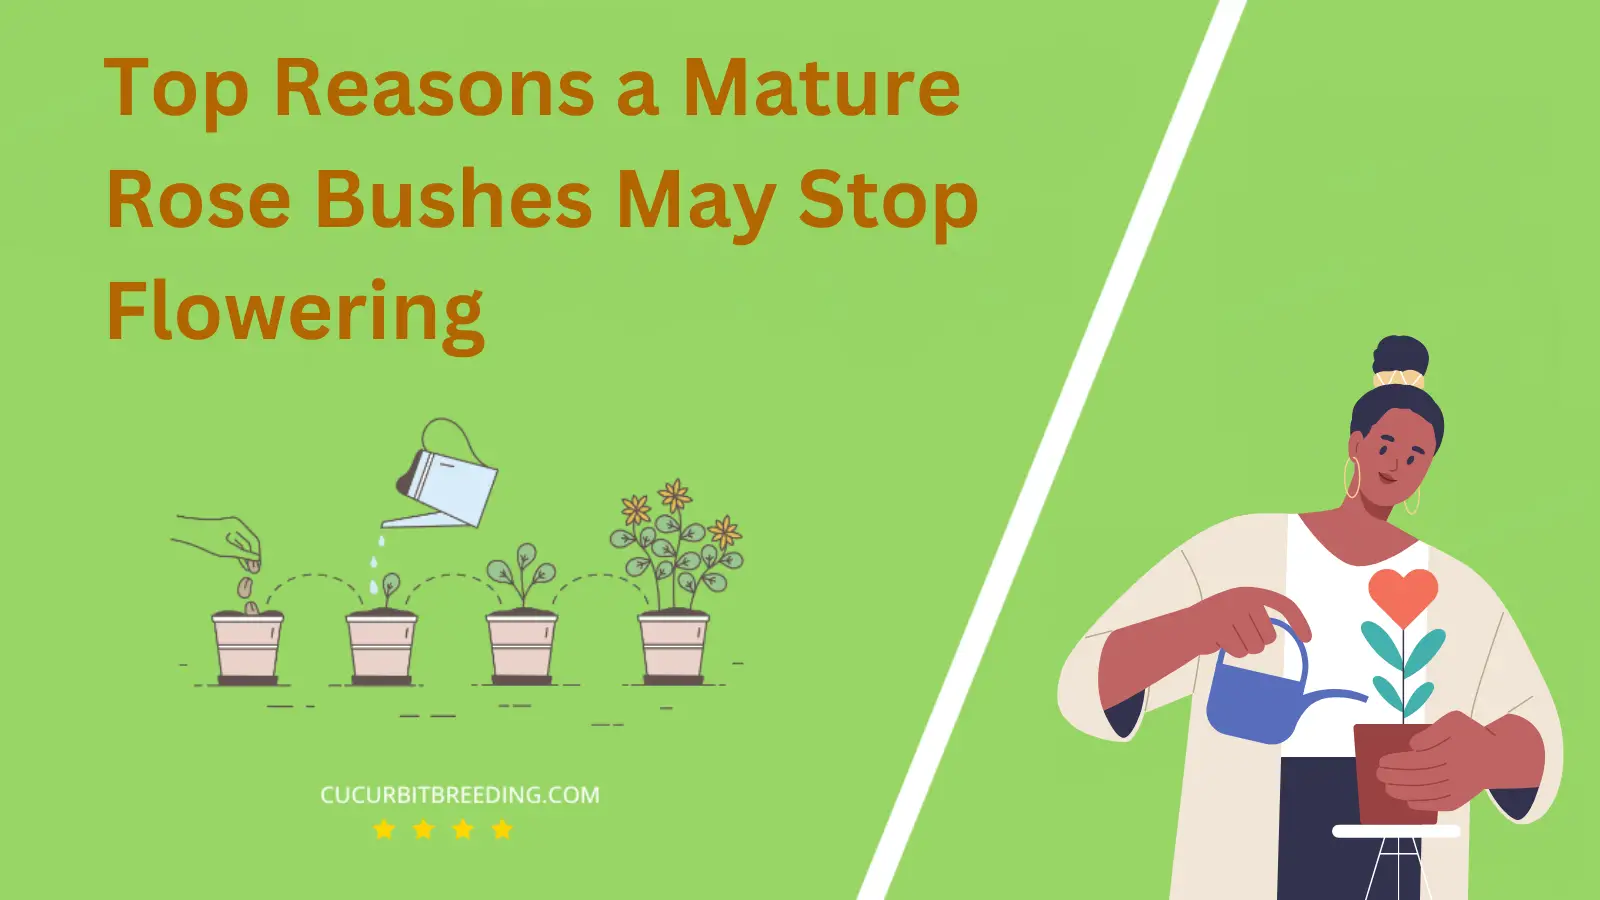 Top Reasons a Mature Rose Bushes May Stop Flowering